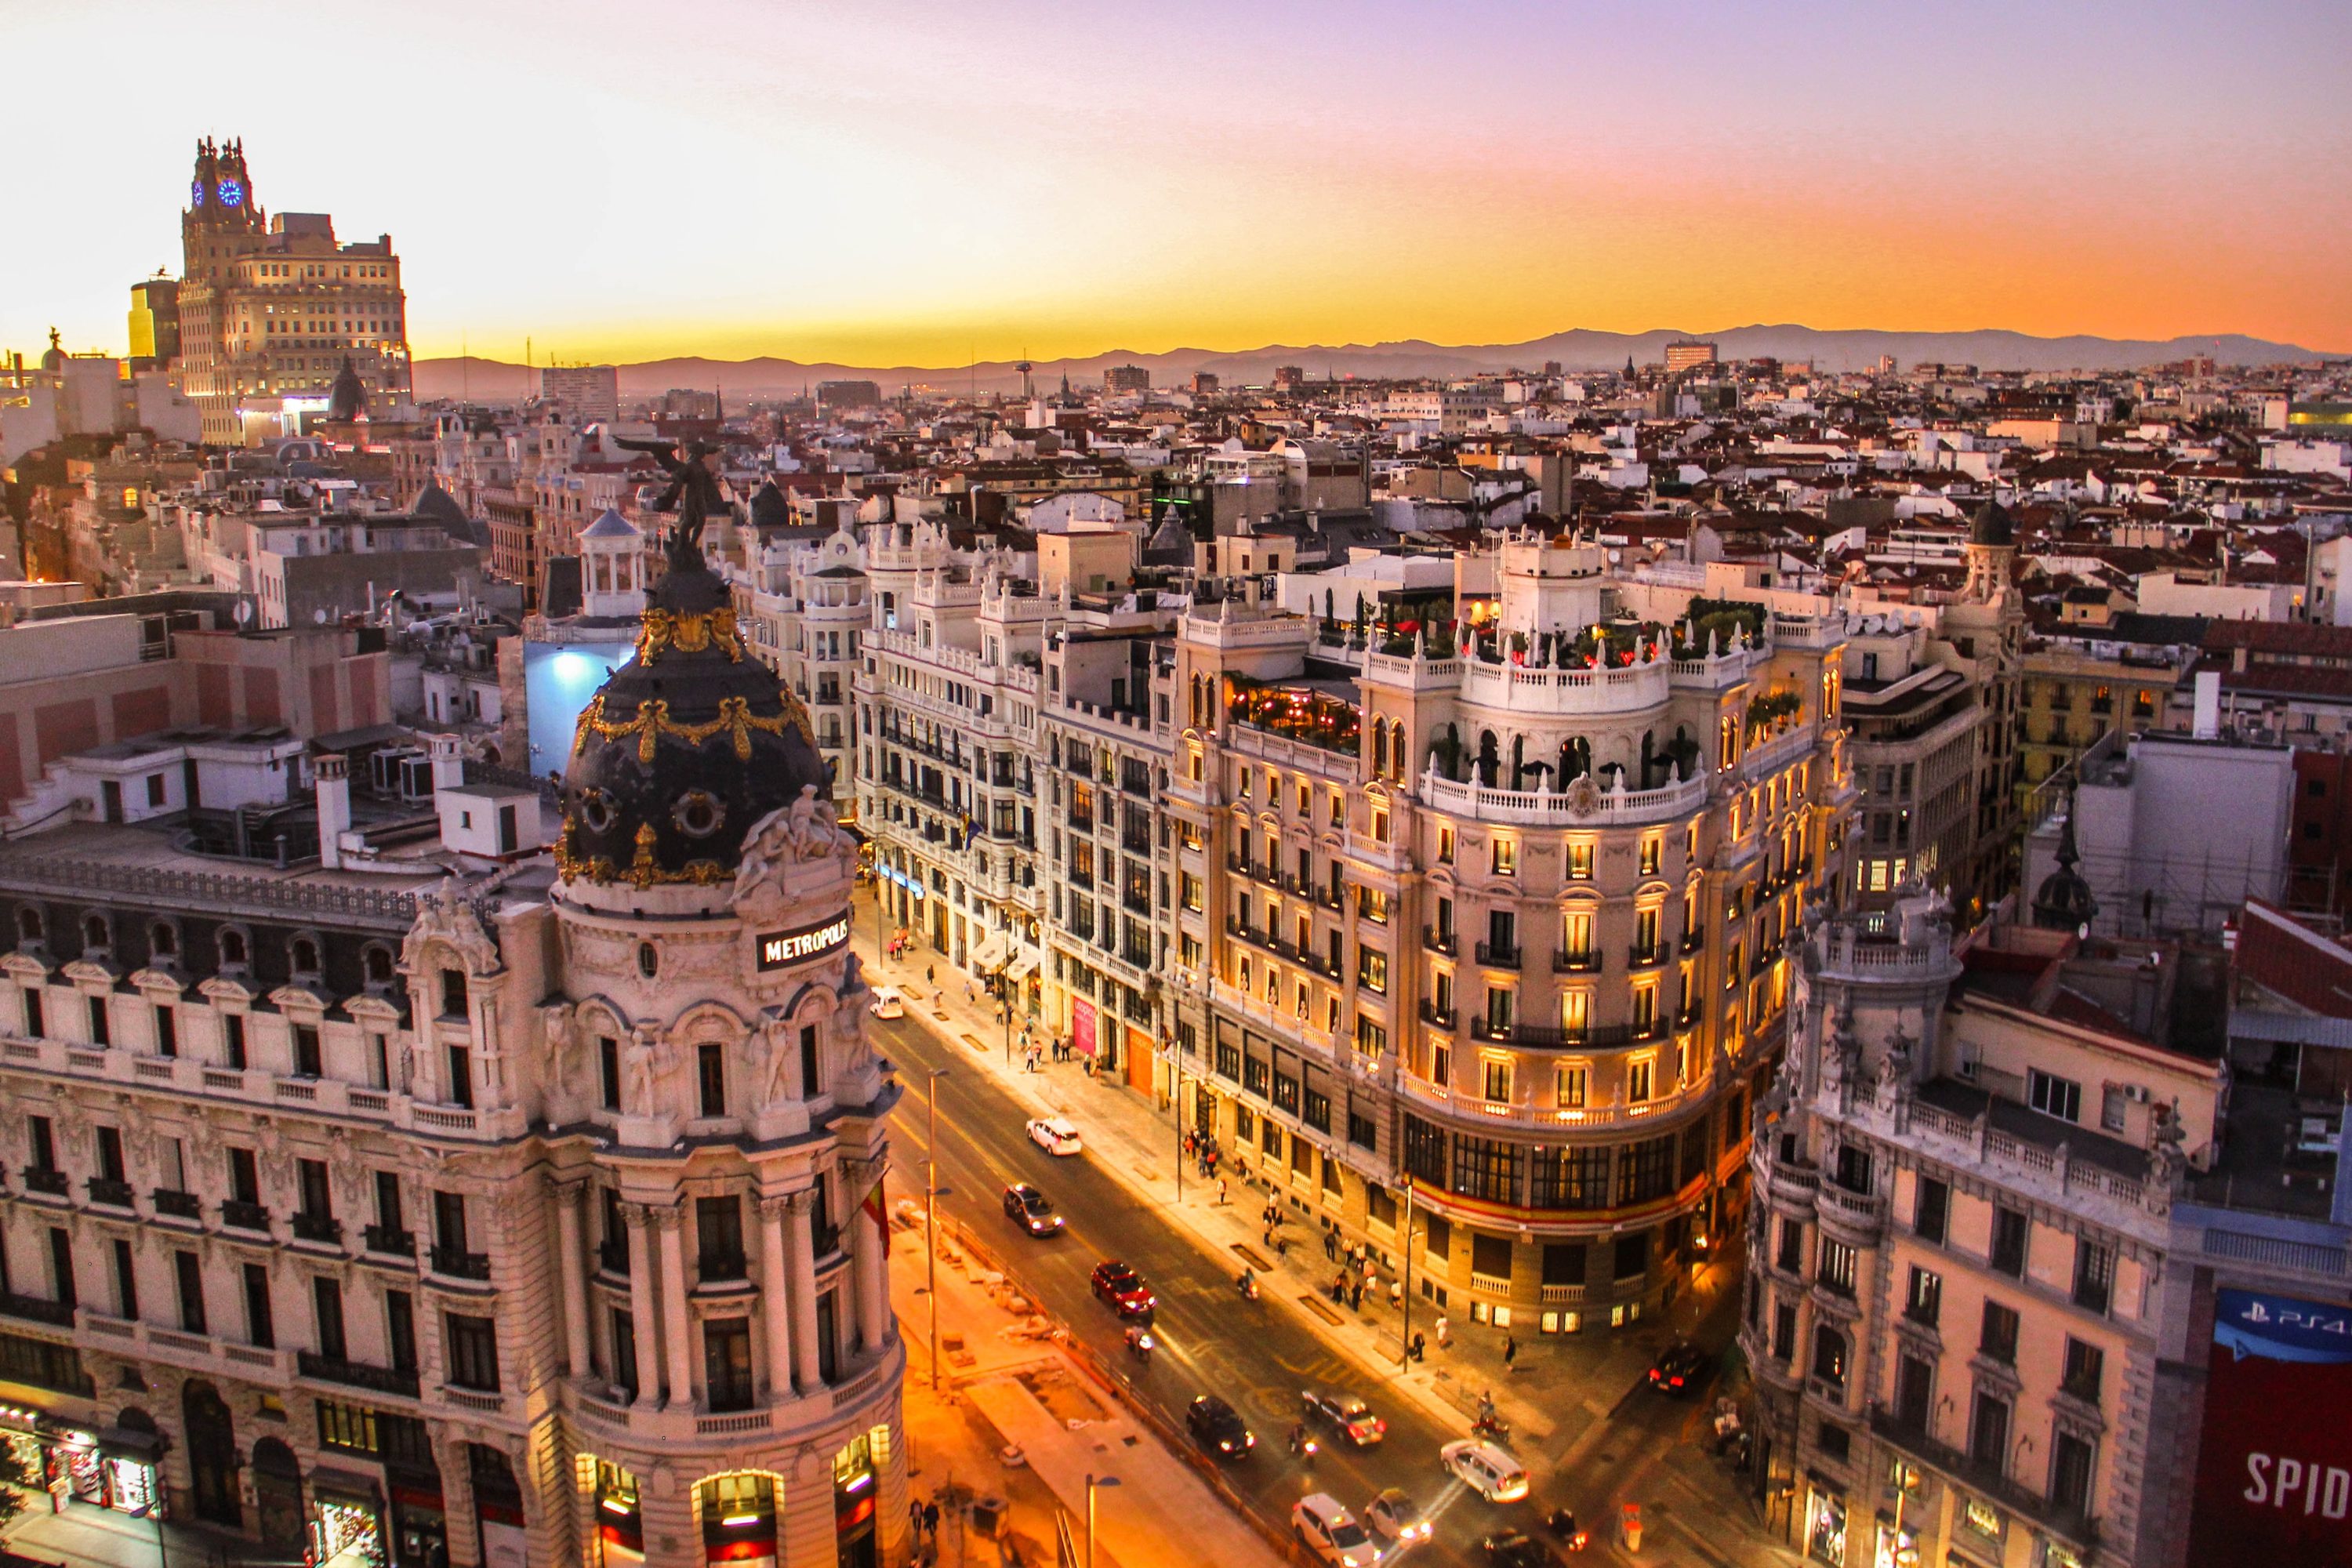 Madrid at sunset